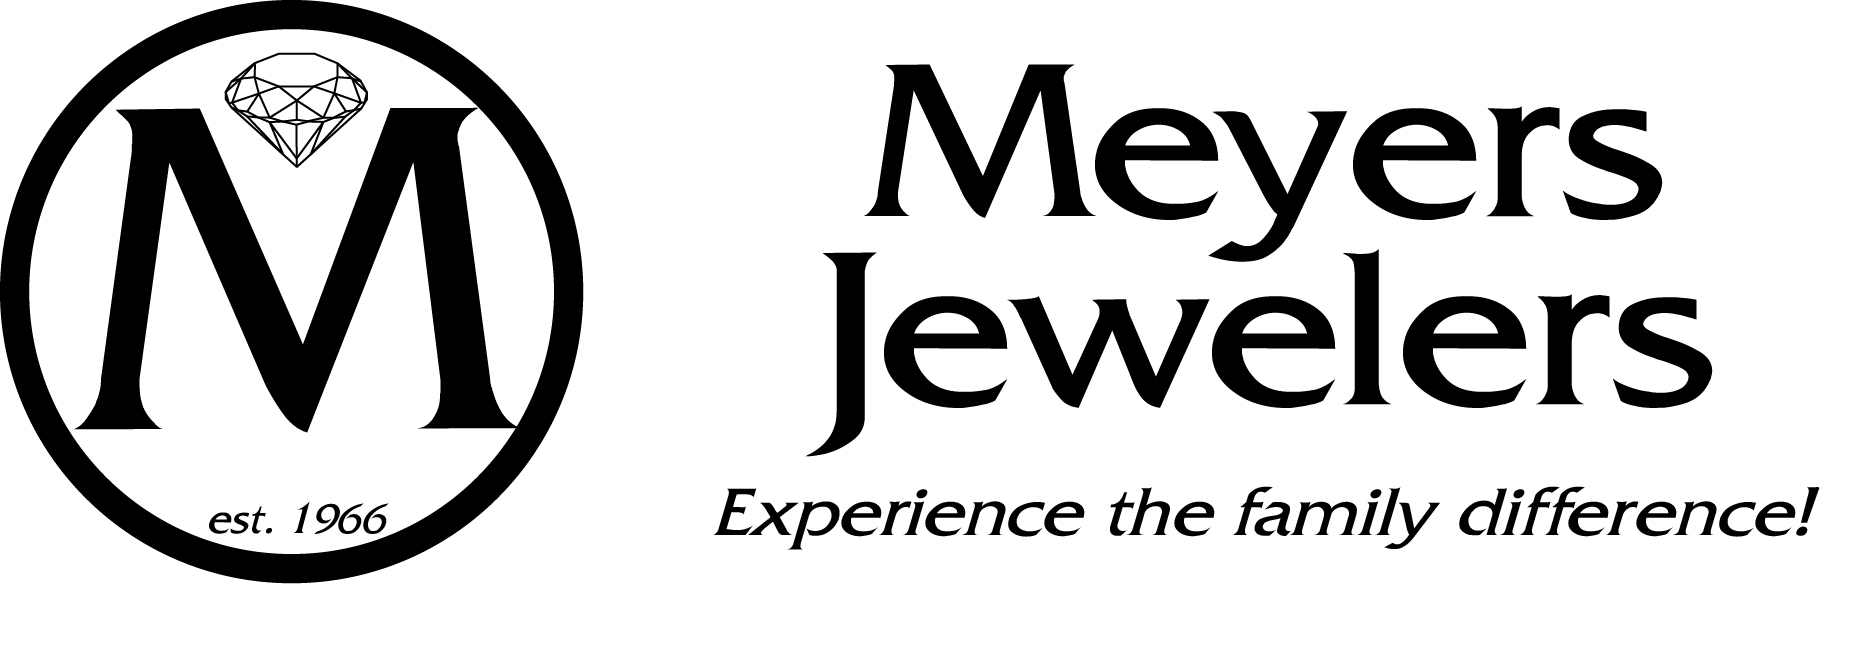 Meyers Jewelers